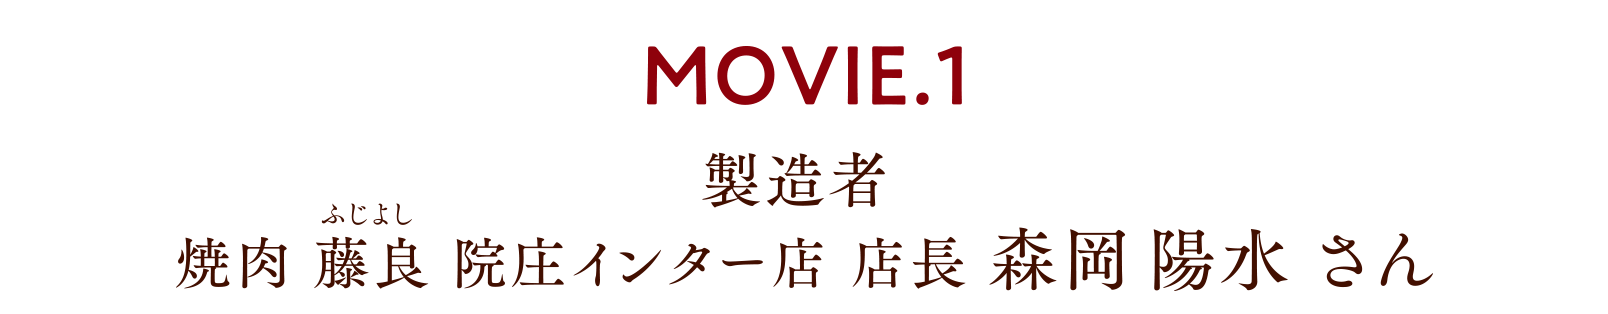 MOVIE.1 製造者 焼肉 藤良 院庄インター店 店長 森岡 陽水 さん